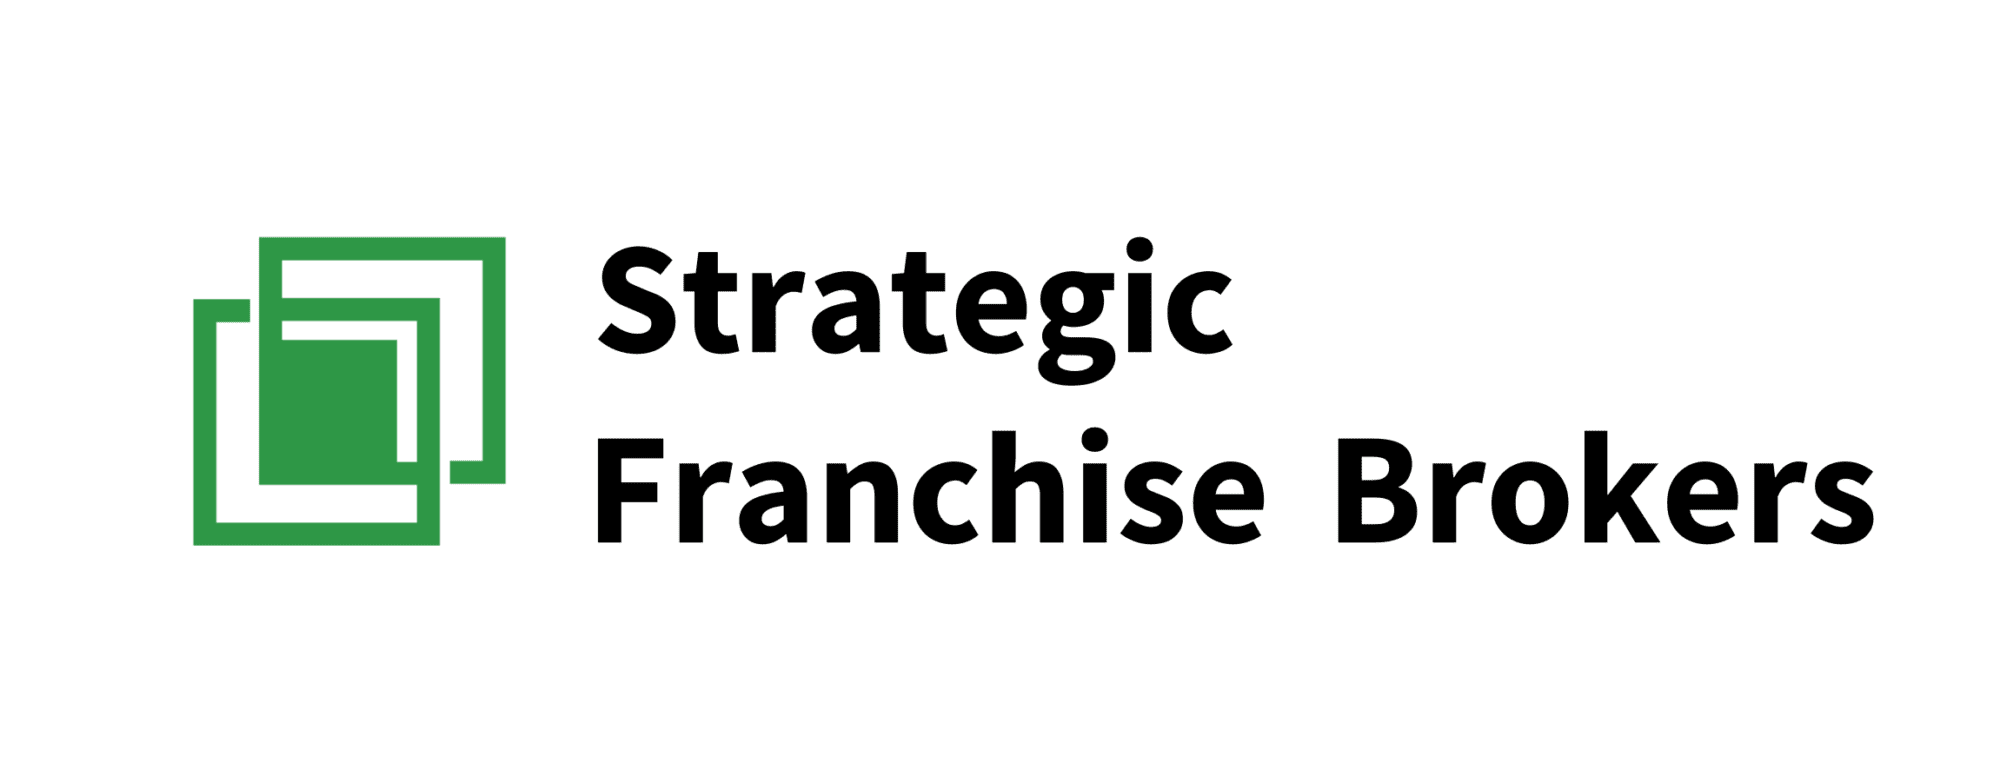 Strategic Franchise Brokers e